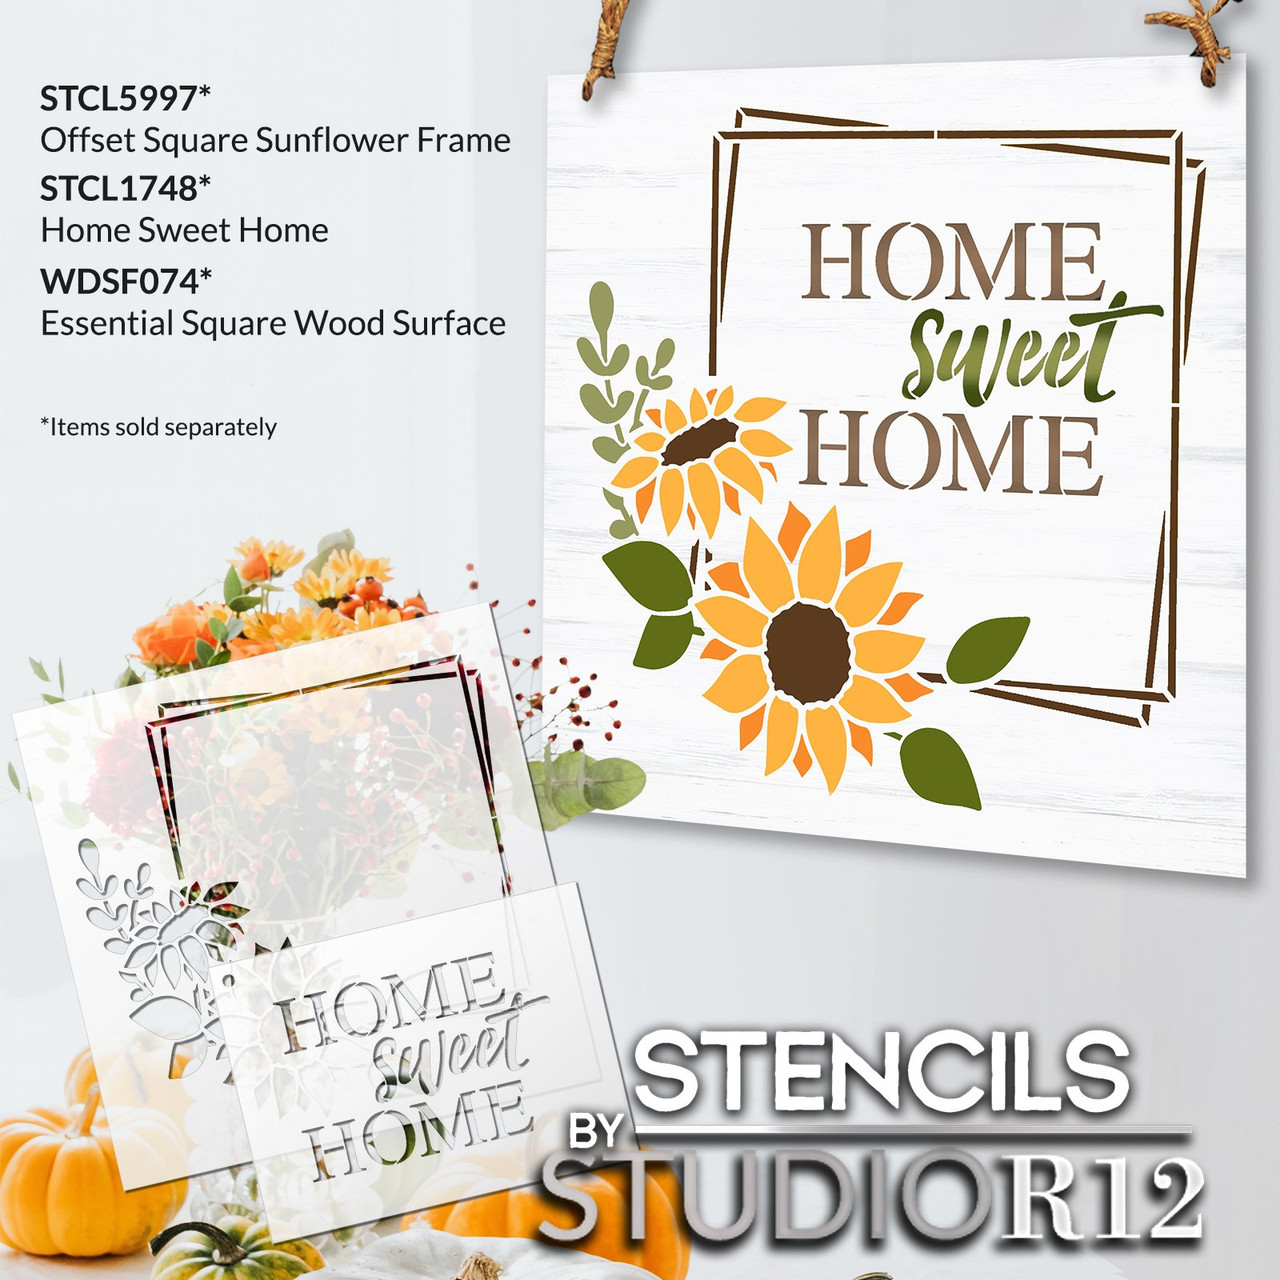 Square Geometric Sunflower Monogram Frame Stencil by StudioR12 - Select Size - USA MADE - Craft DIY Modern Home Decor | Paint Minimalist Wood Sign